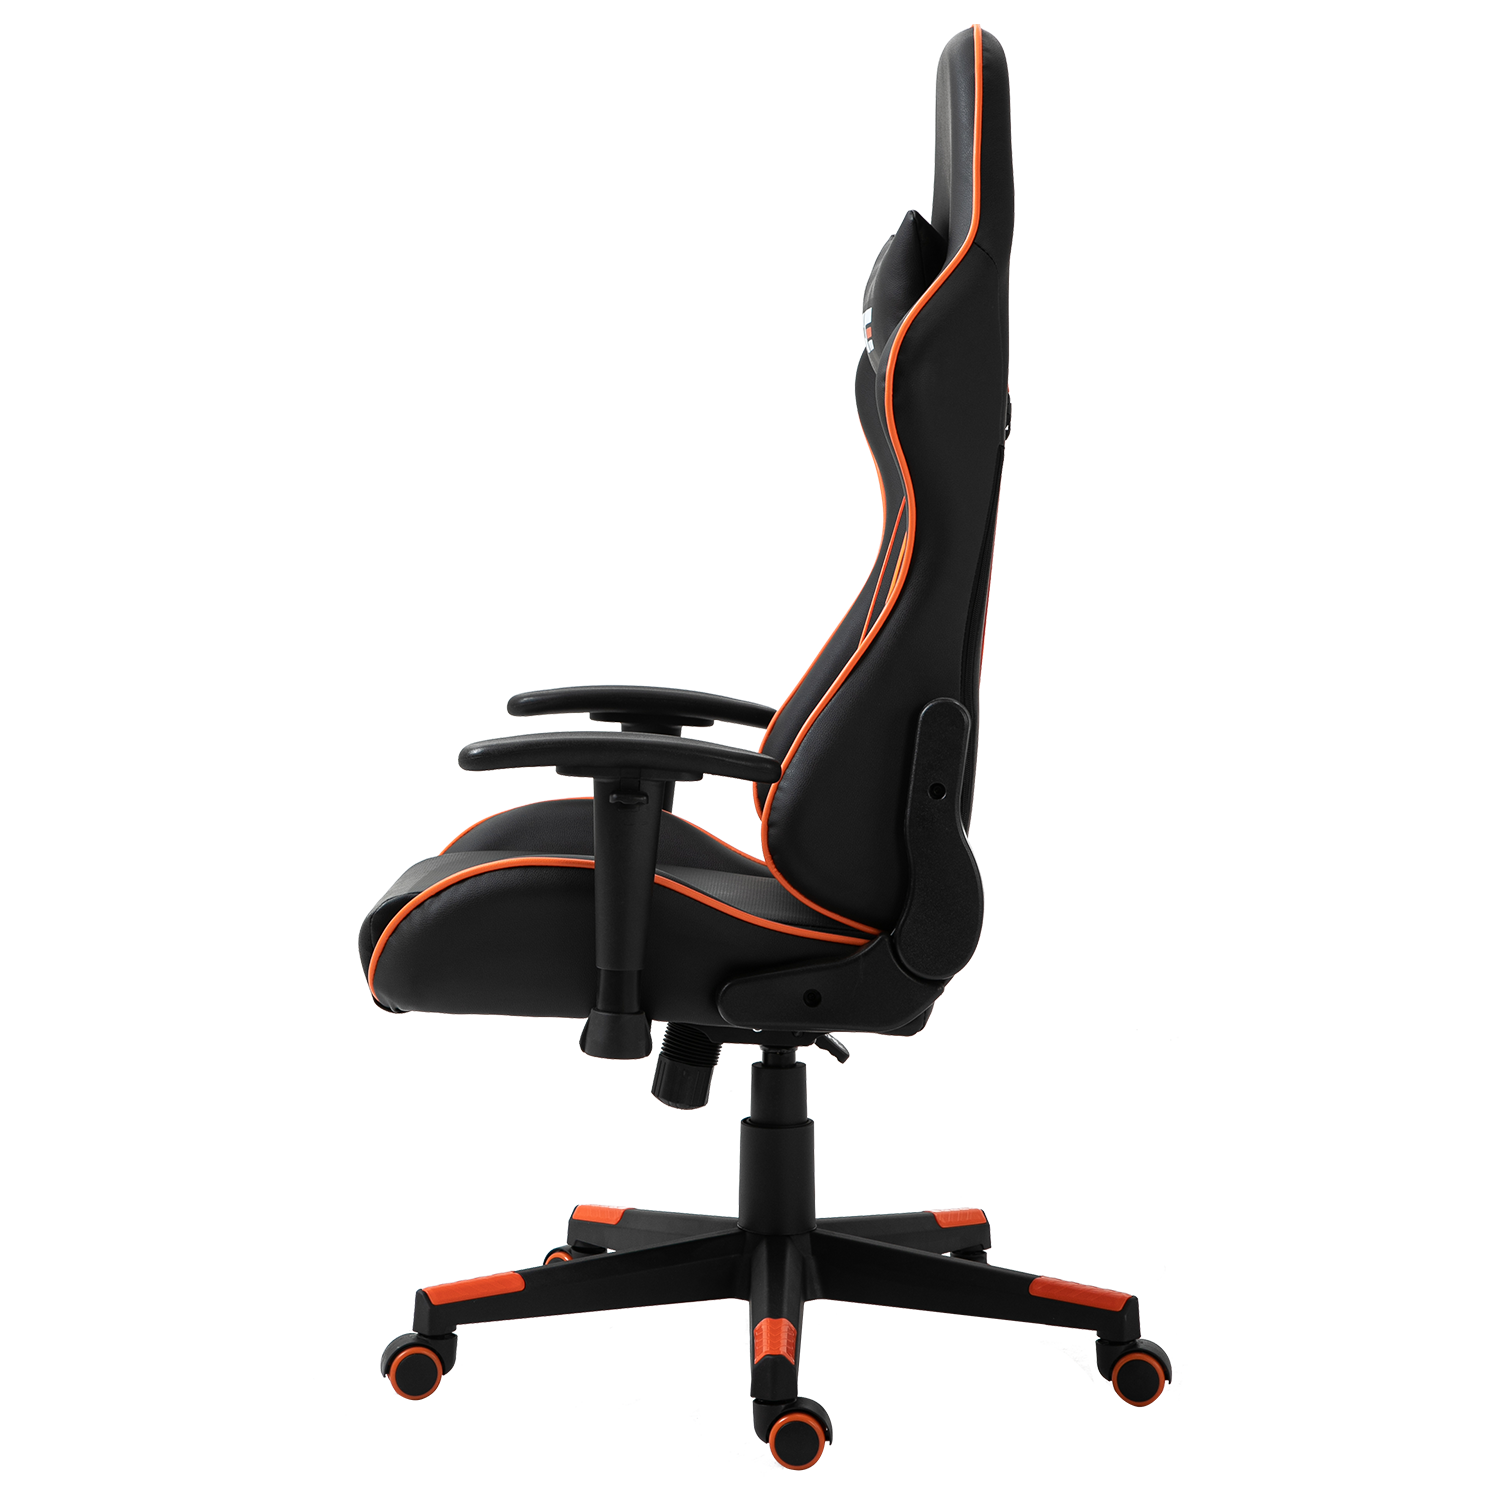 Cadeira Gamer Darkflash RC-350 - Preto